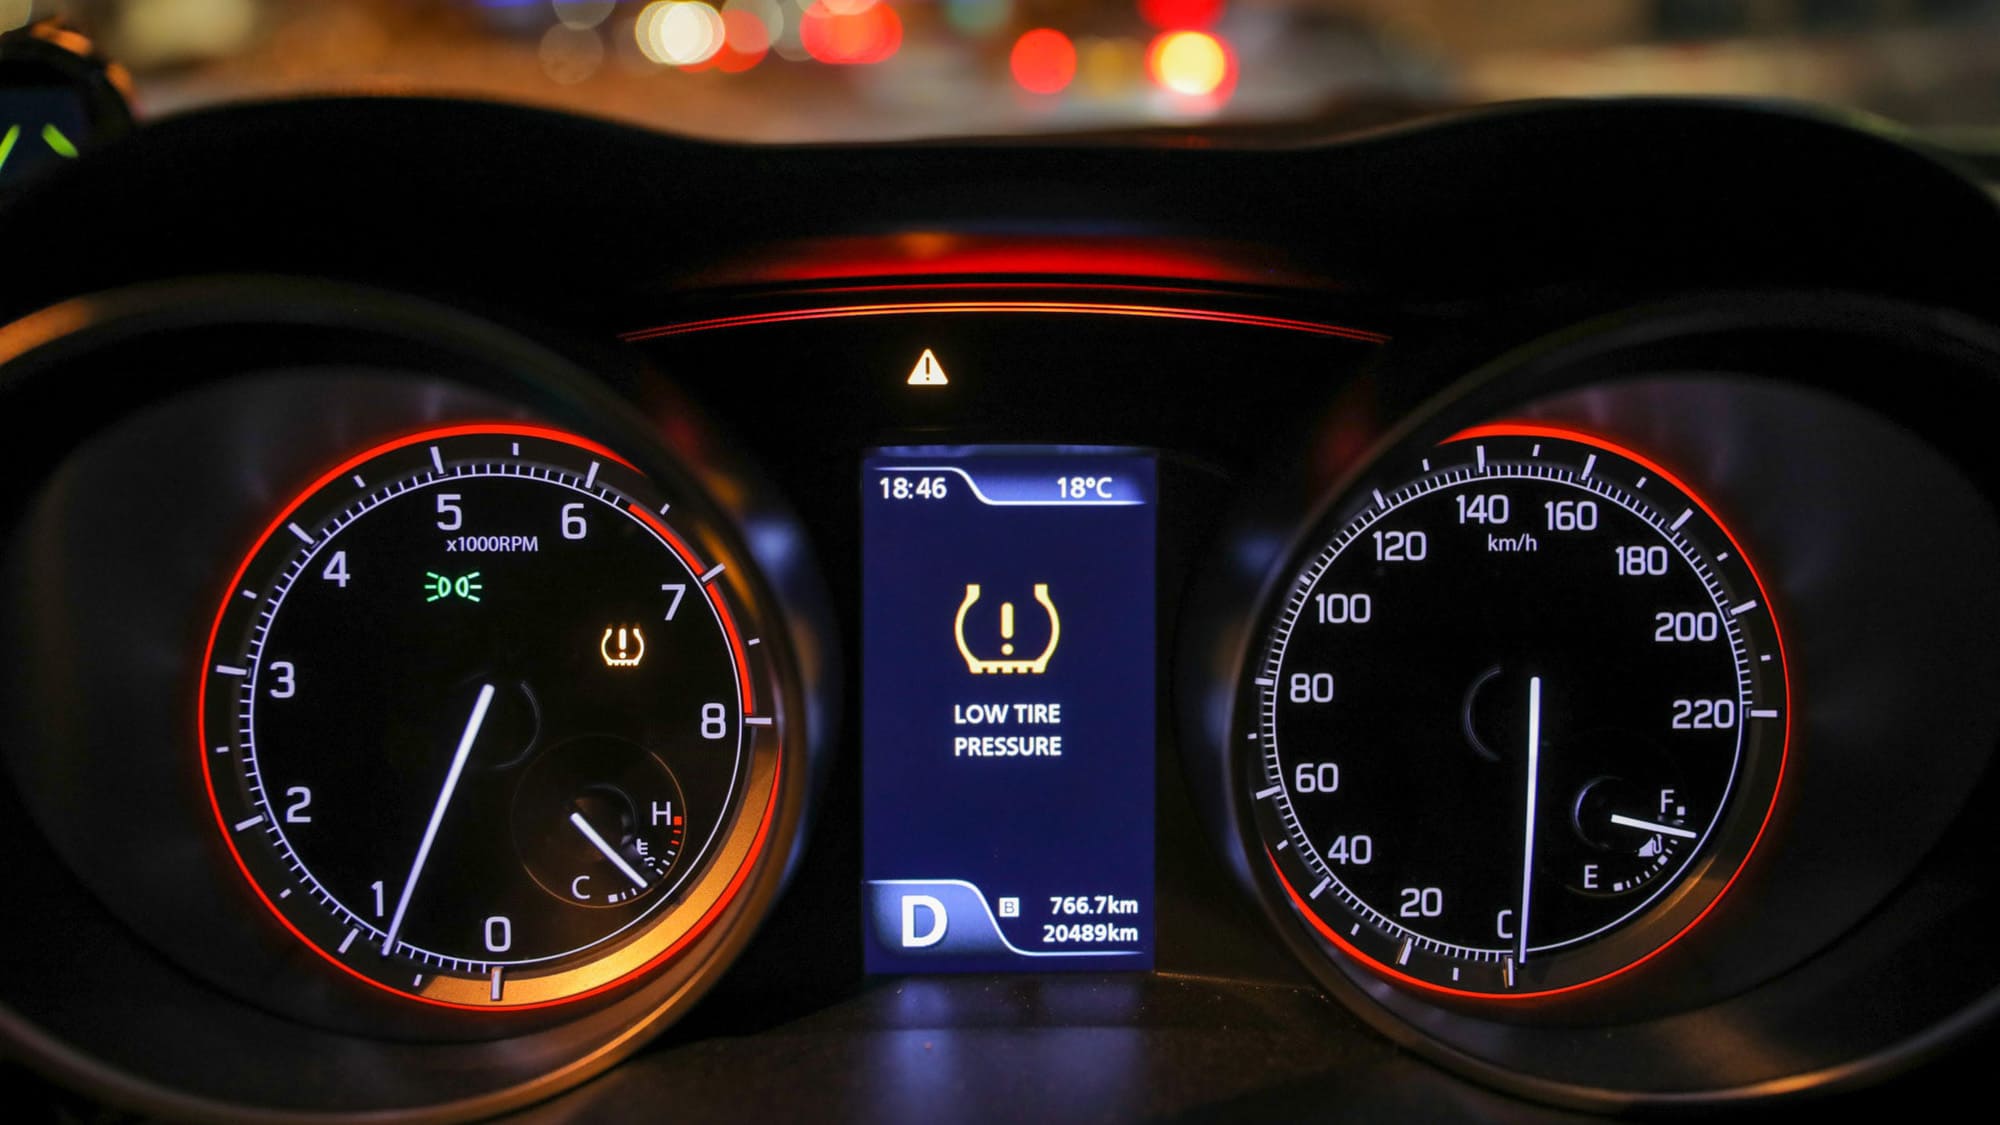 Vehicle's Tire Pressure Light Illuminates